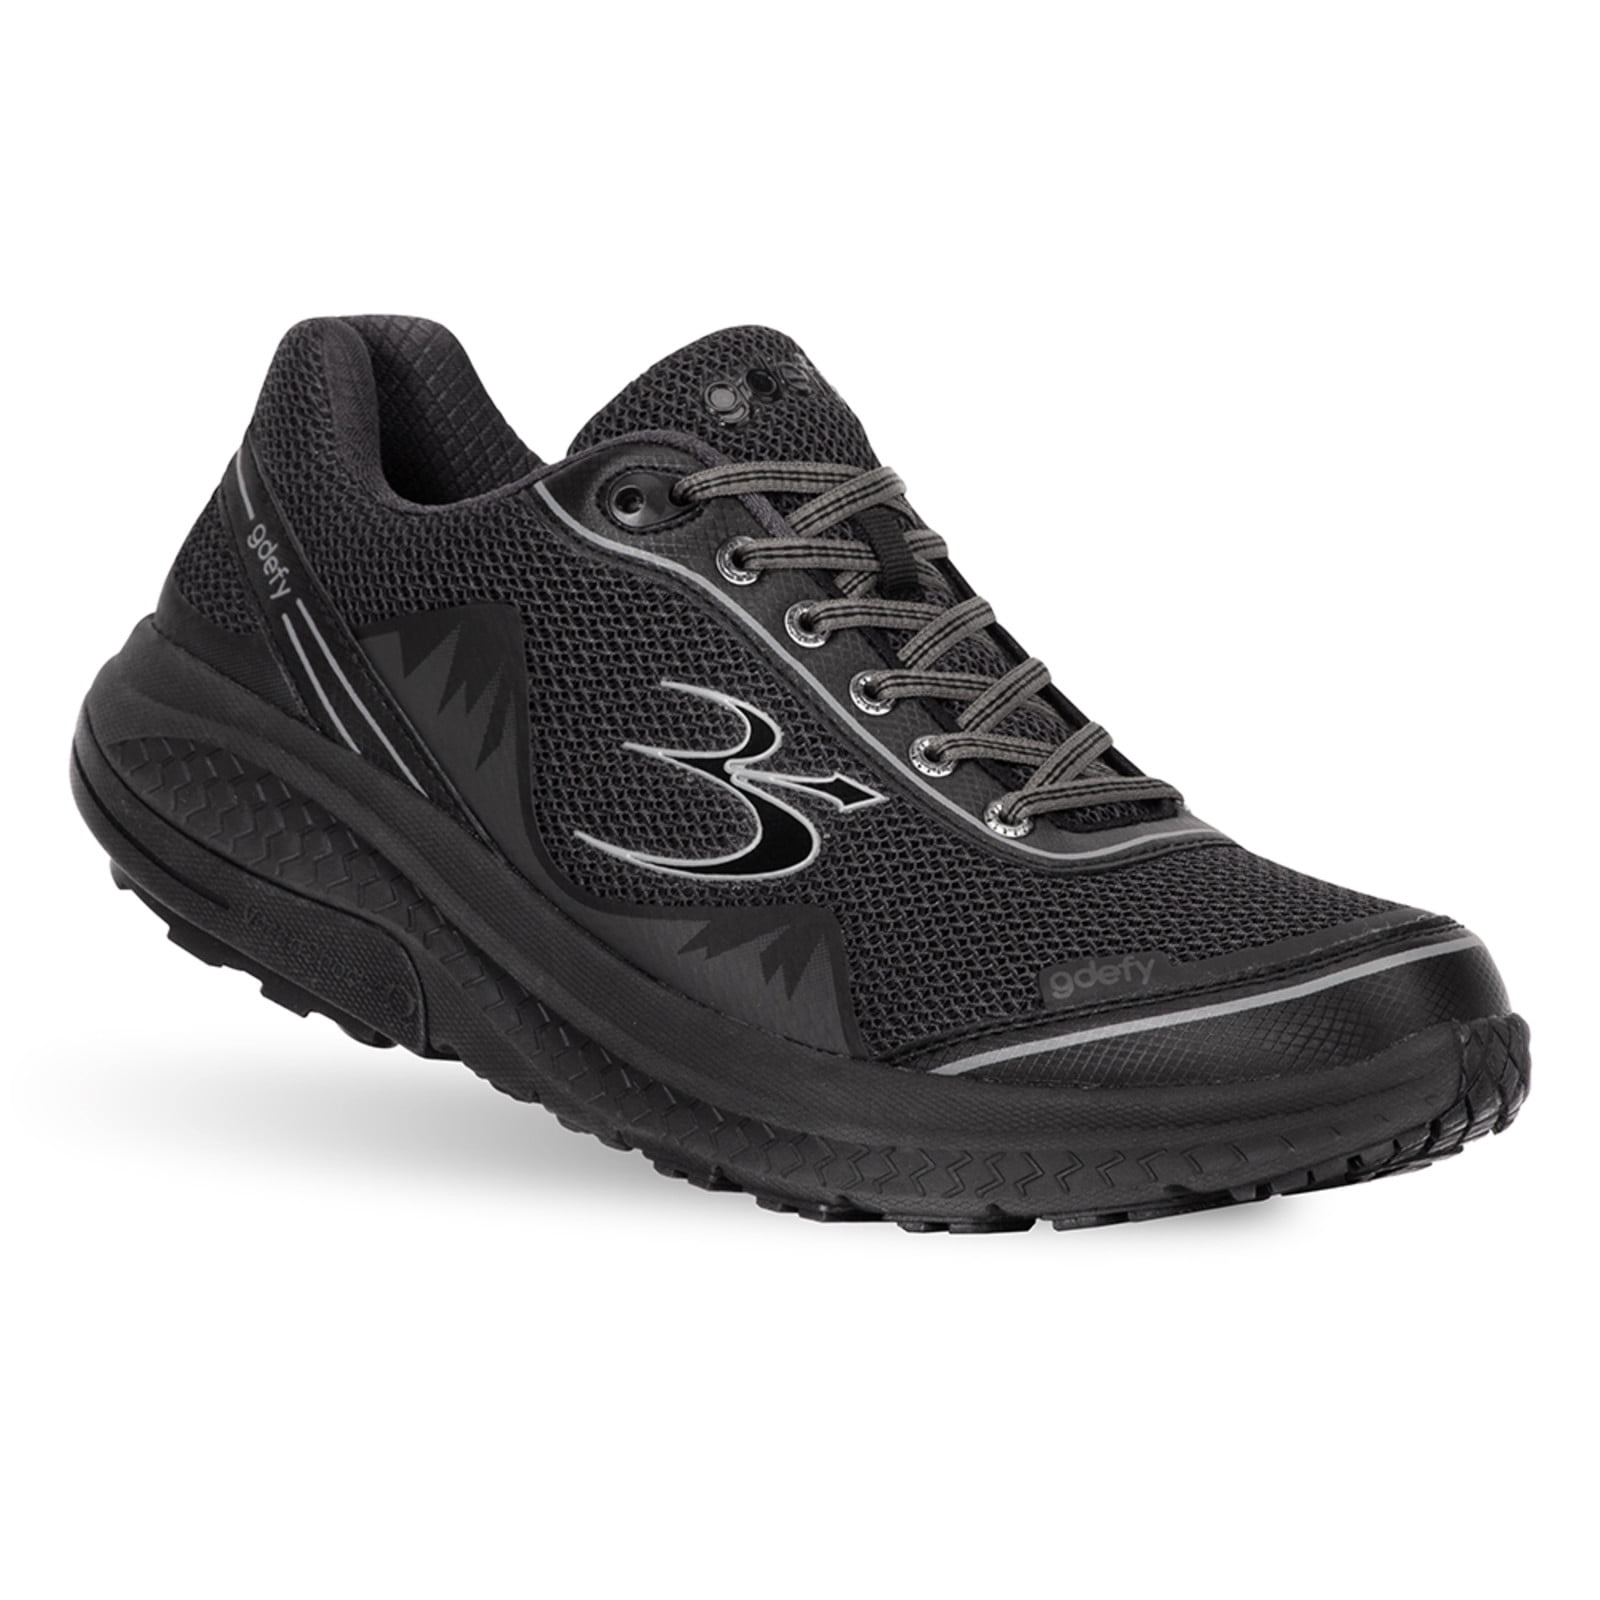 Gravity Defyer Men's G-Defy Mighty Walk Athletic Running Sneakers (Black, 9.5 D(M) US Men)